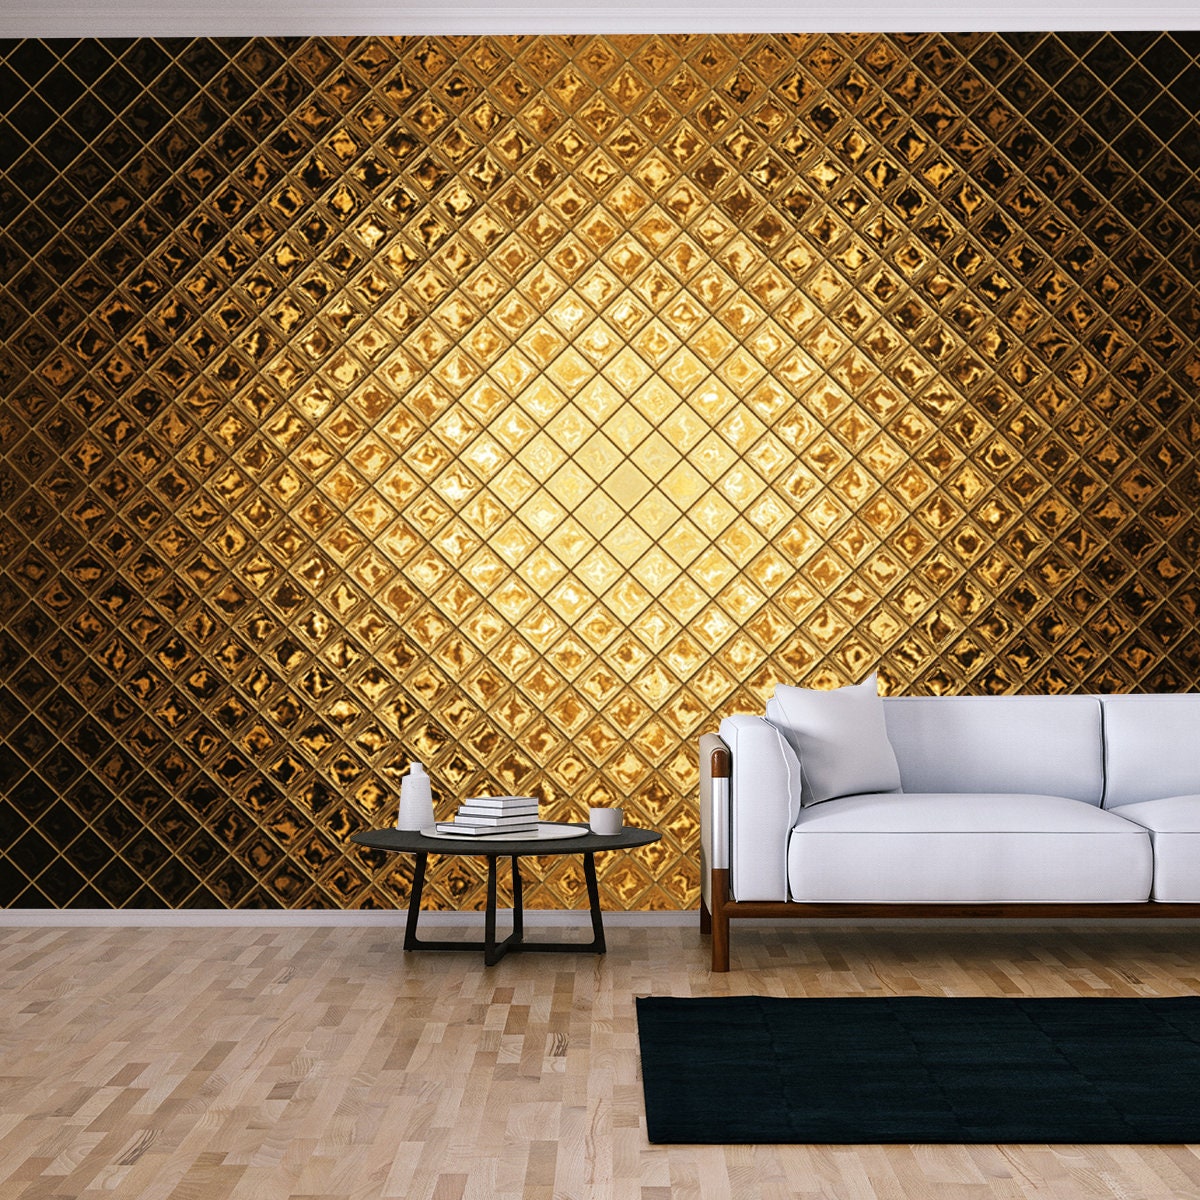 Luxurious Golden Background Wallpaper Living Room Mural